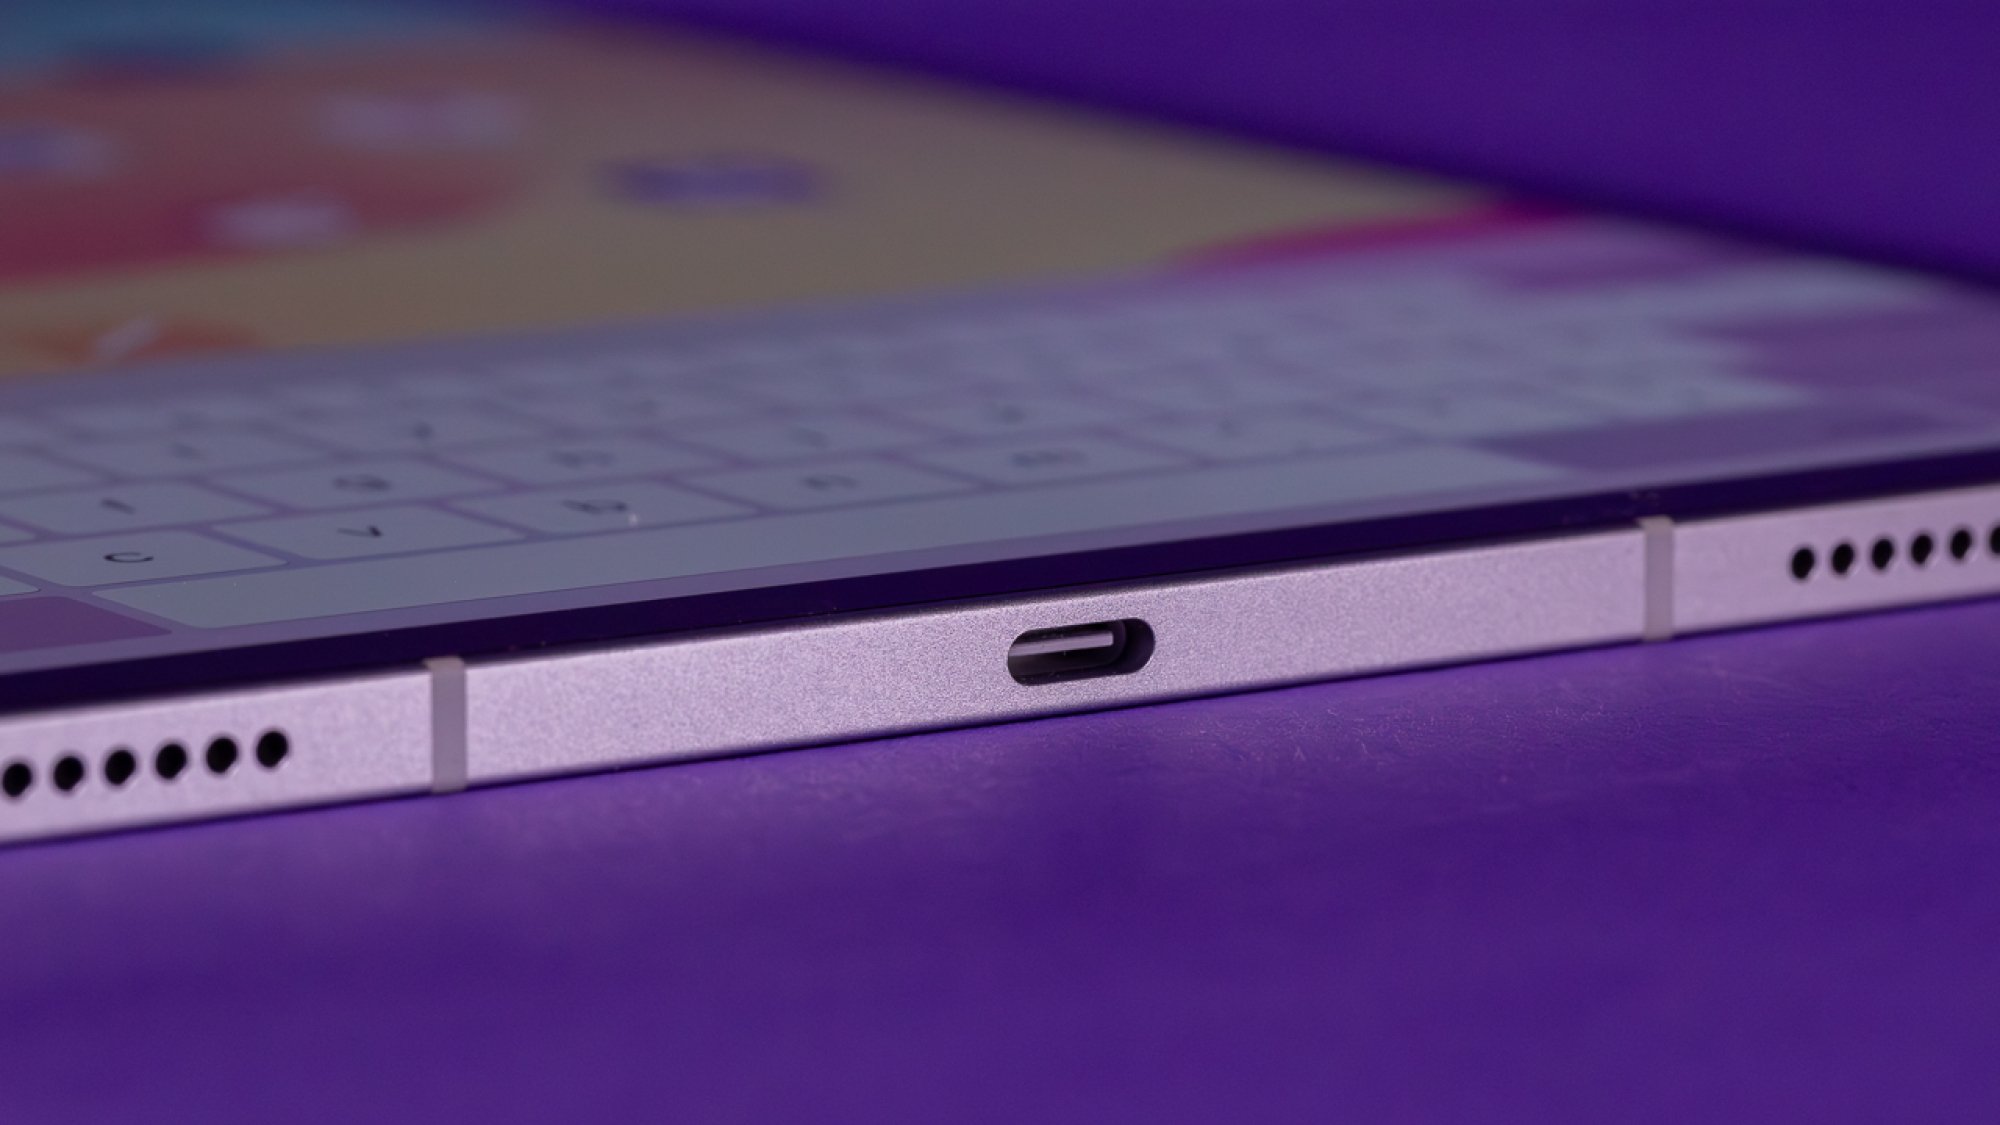 iPad Air USB-C port against purple background